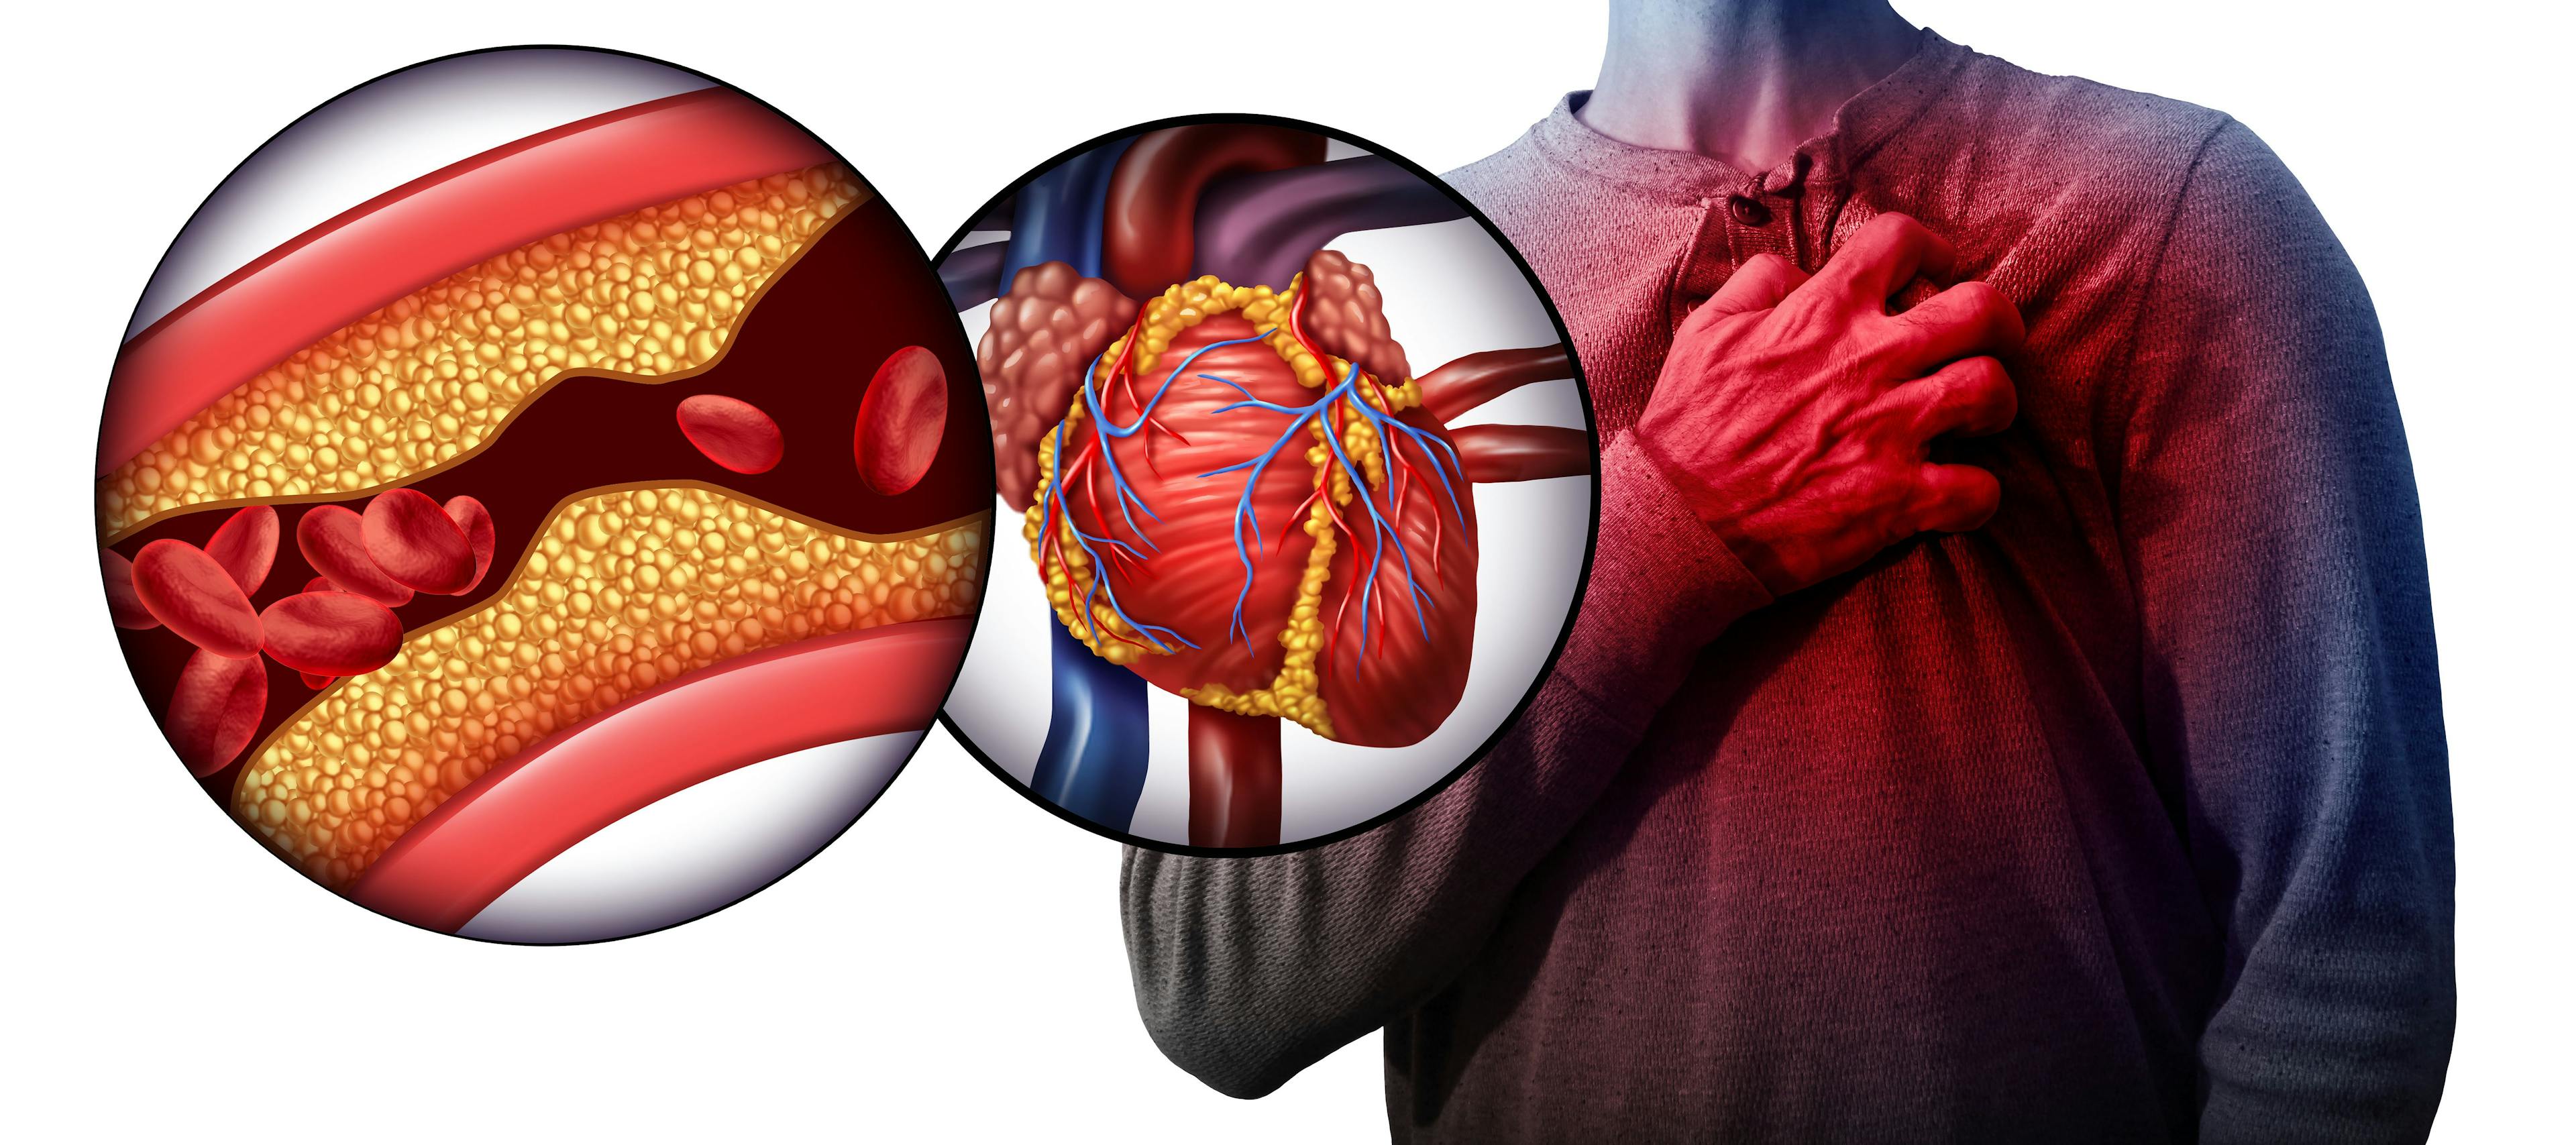 Hypertension Model, Cardiometabolic Risk | image credit: freshidea - stock.adobe.com